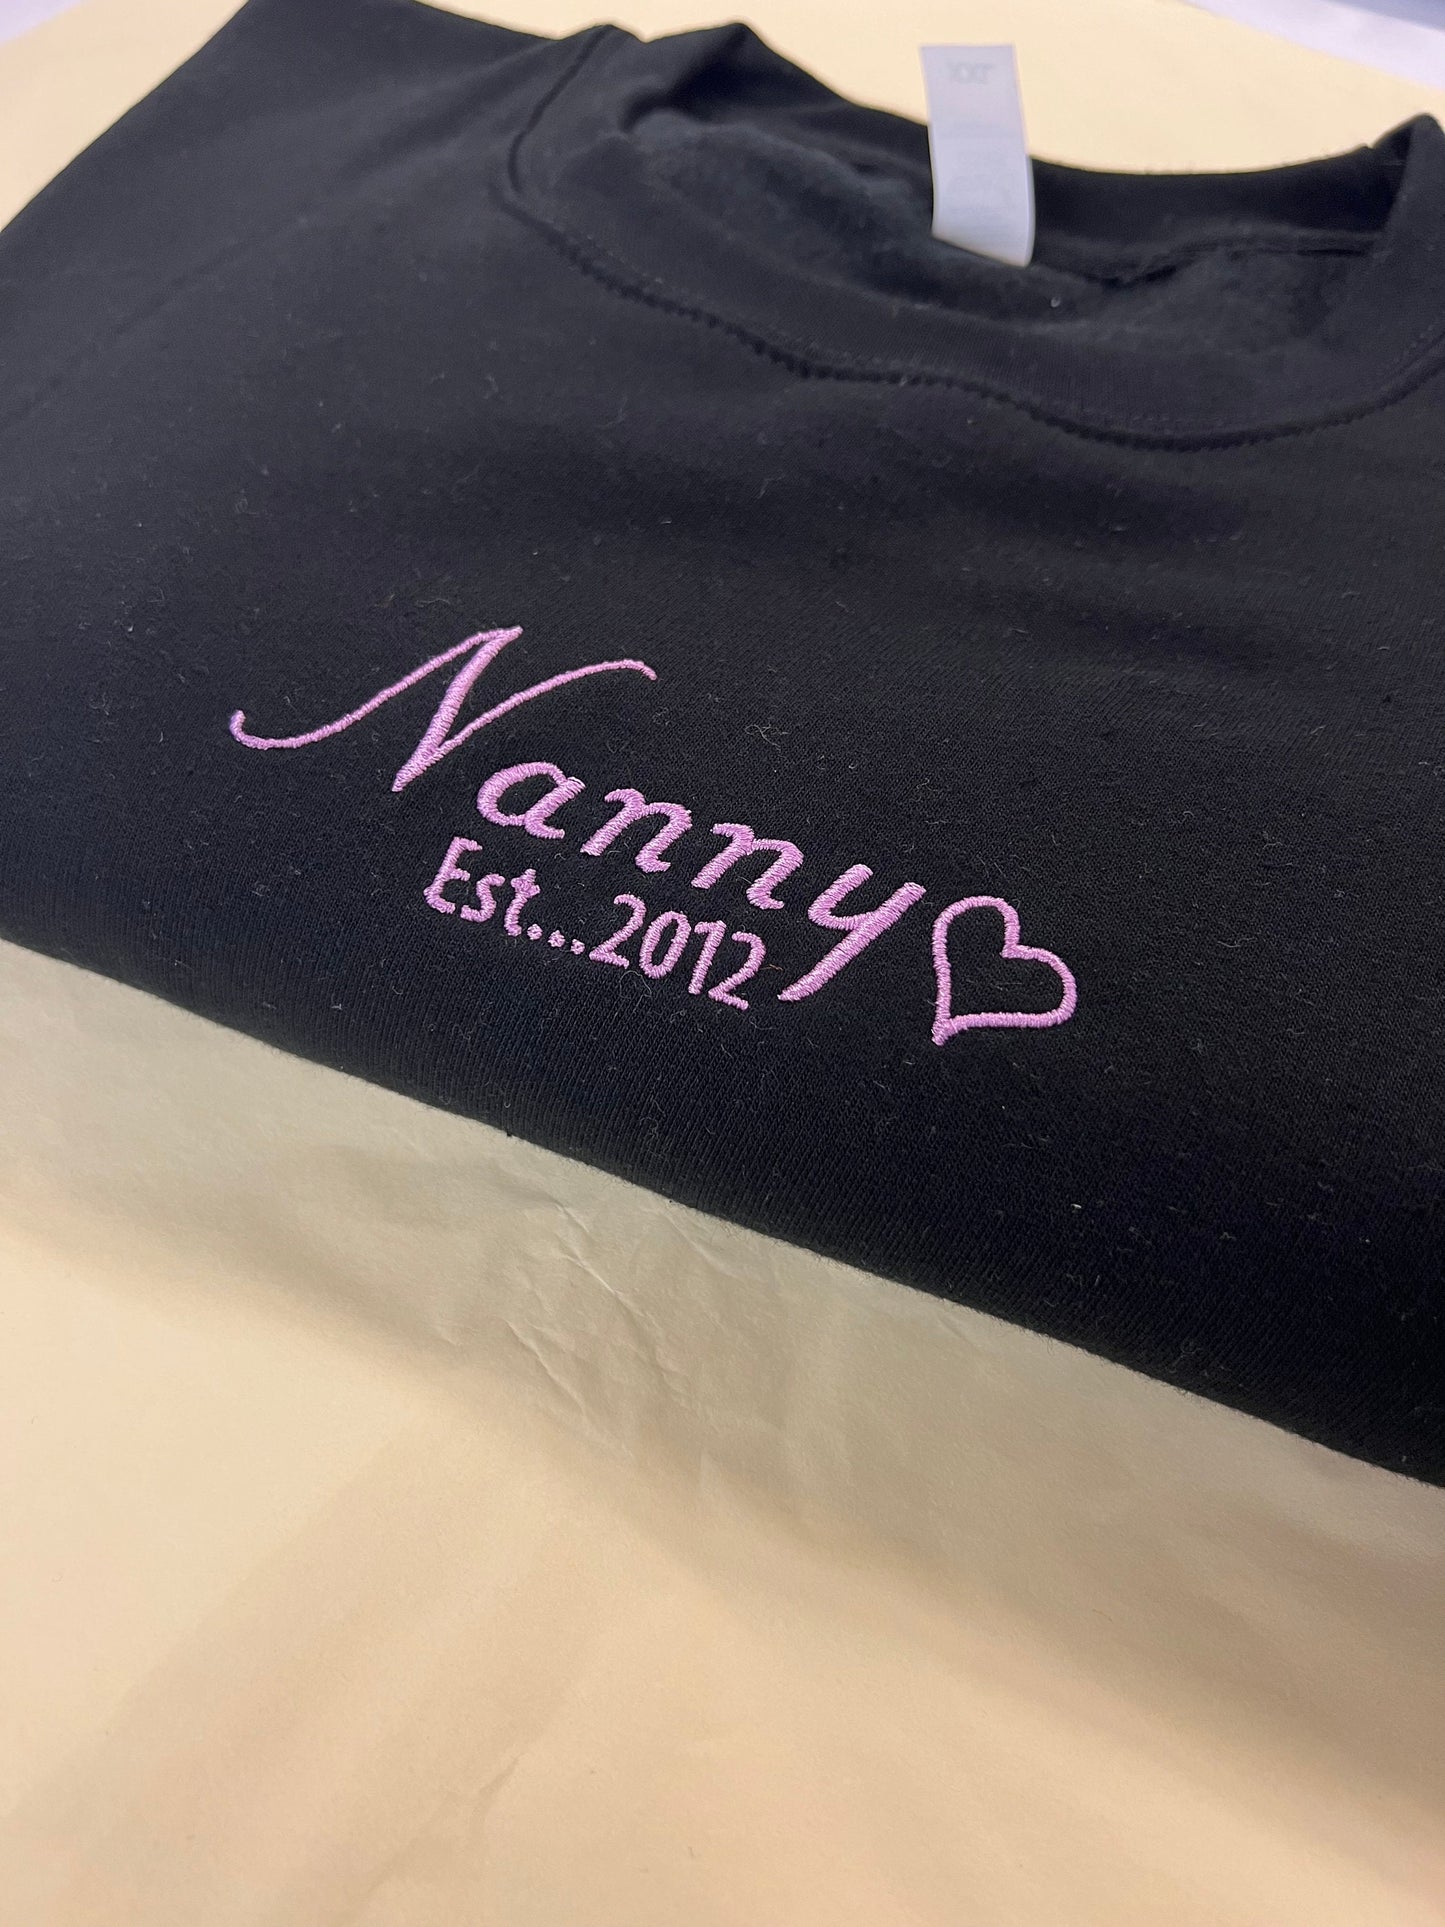 Embroidered Nanny/Granny/ Sweatshirt